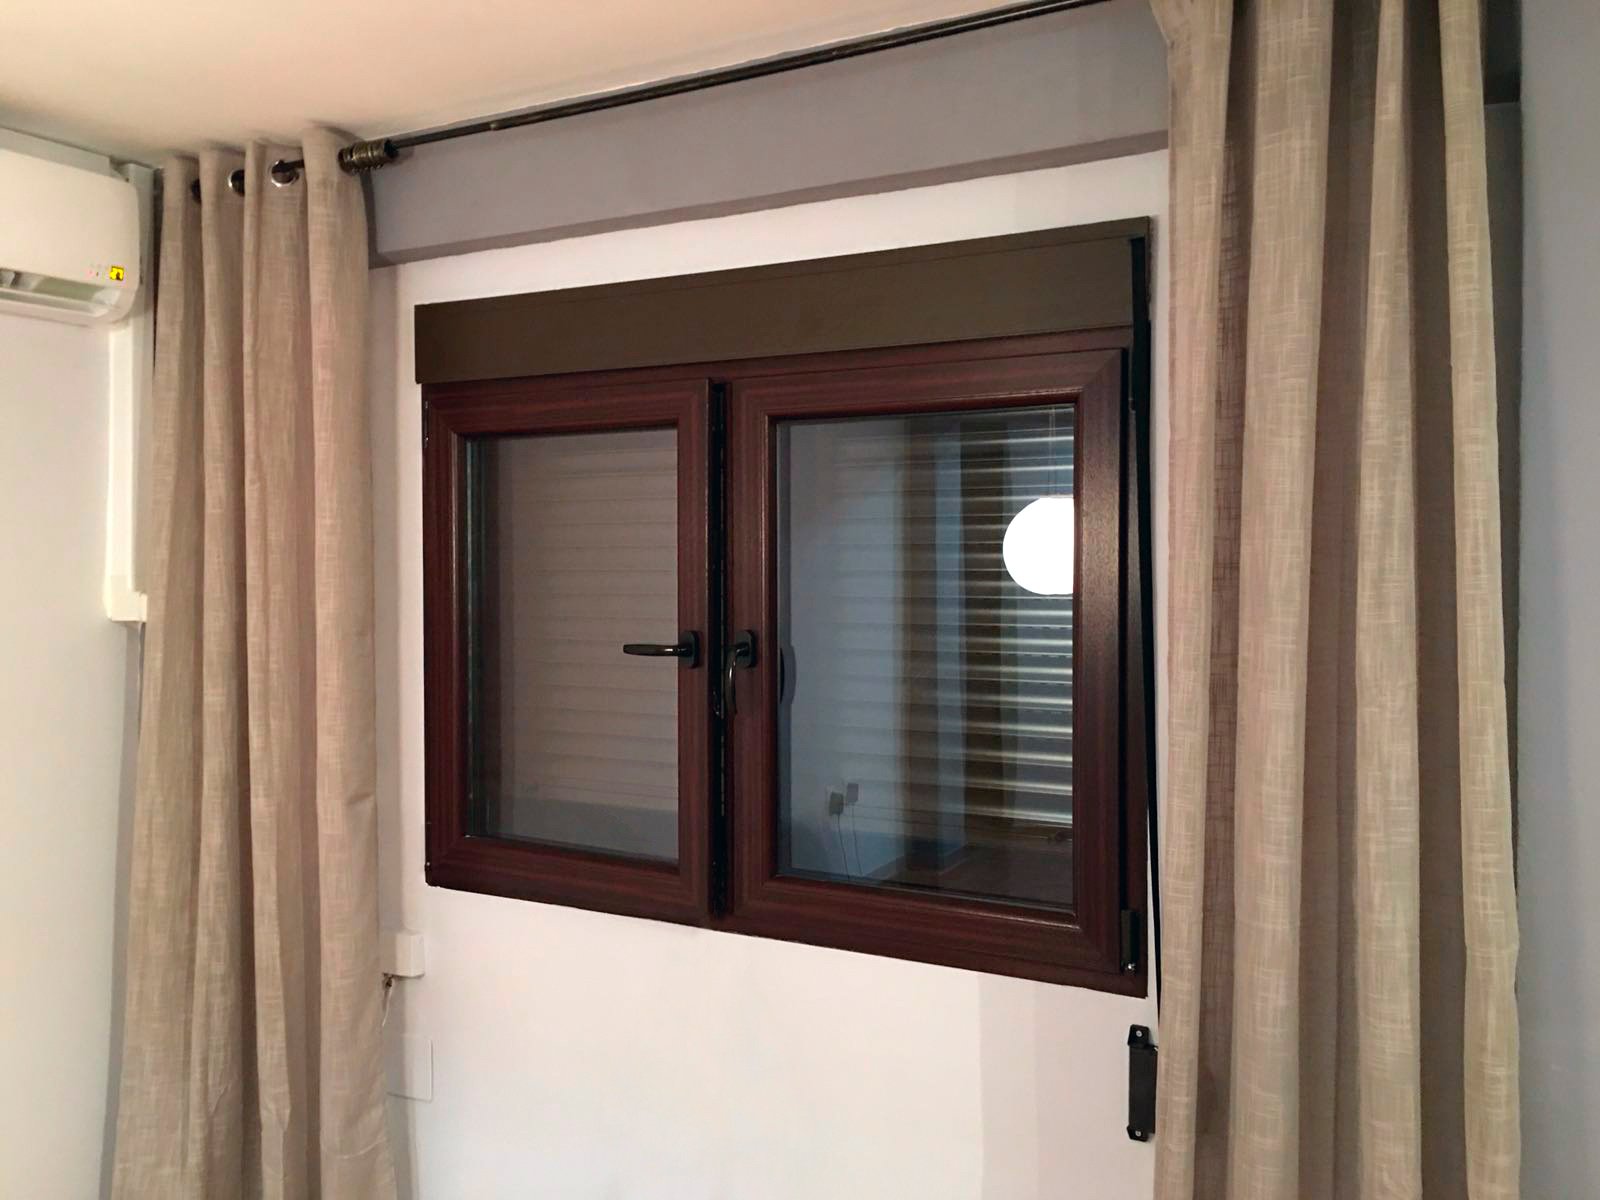 PVC window REHAU tilt-and-turn installed in Valencia mahogany color